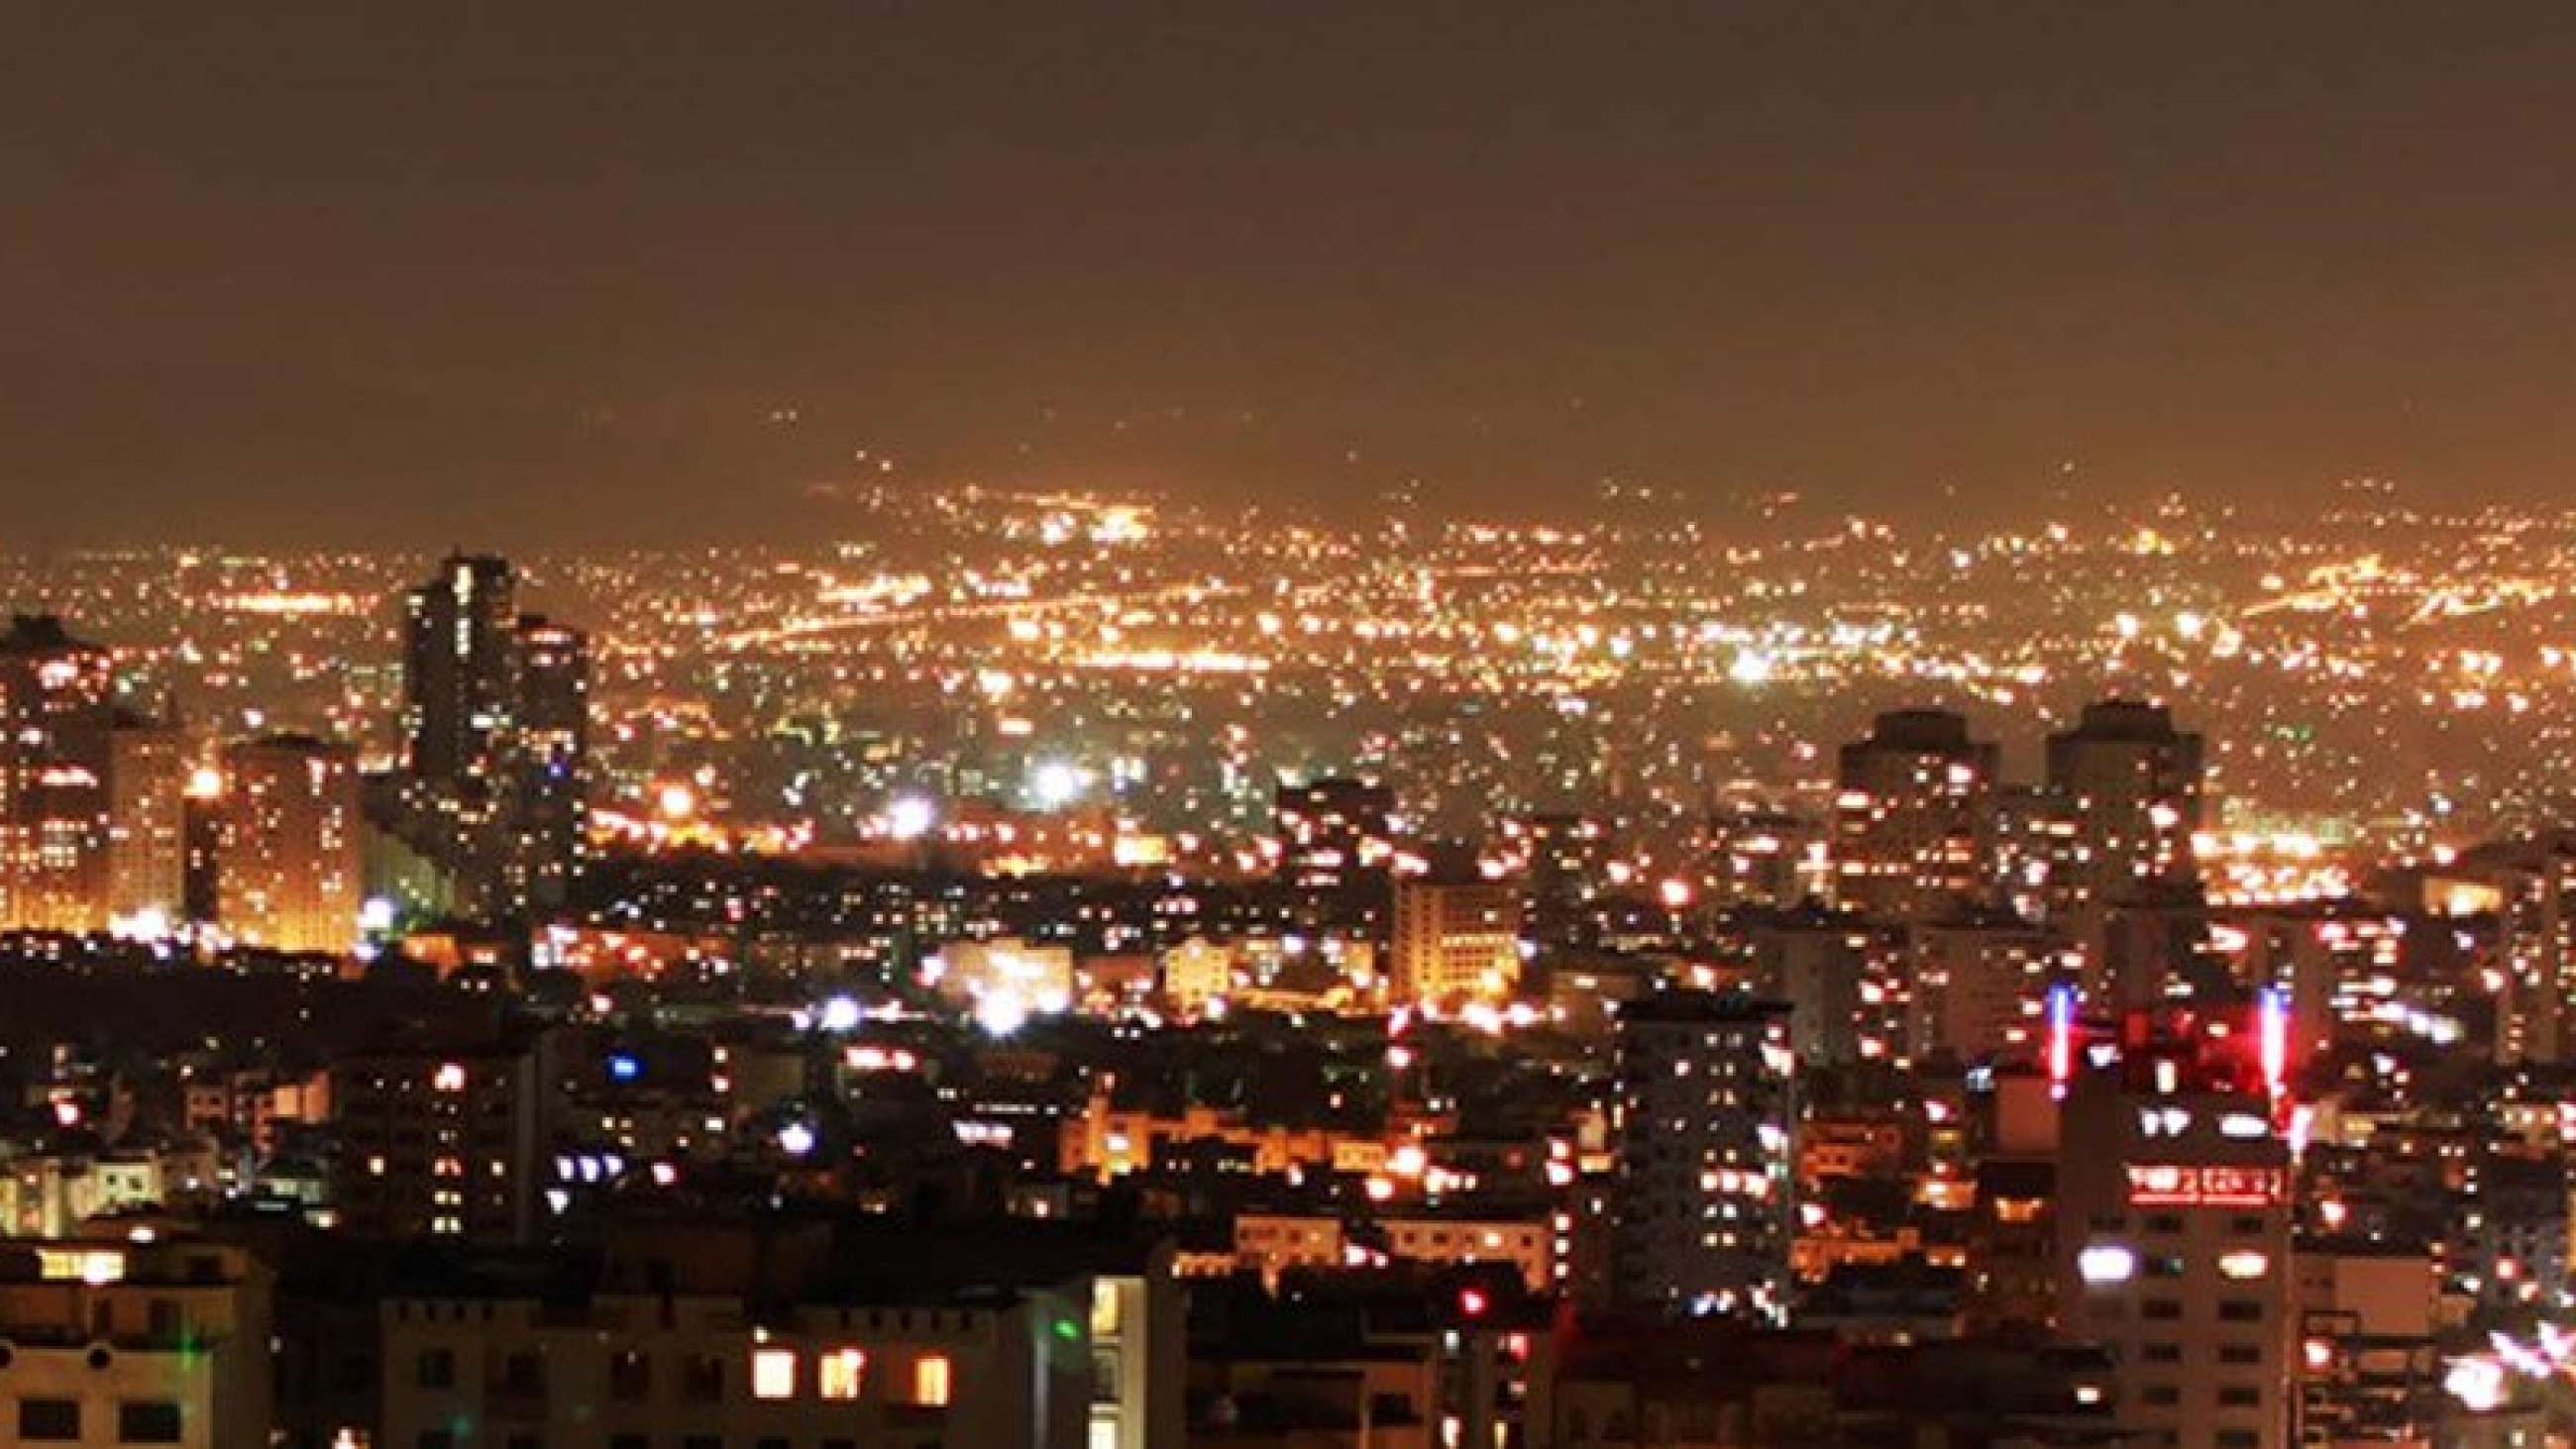 Teheran at night